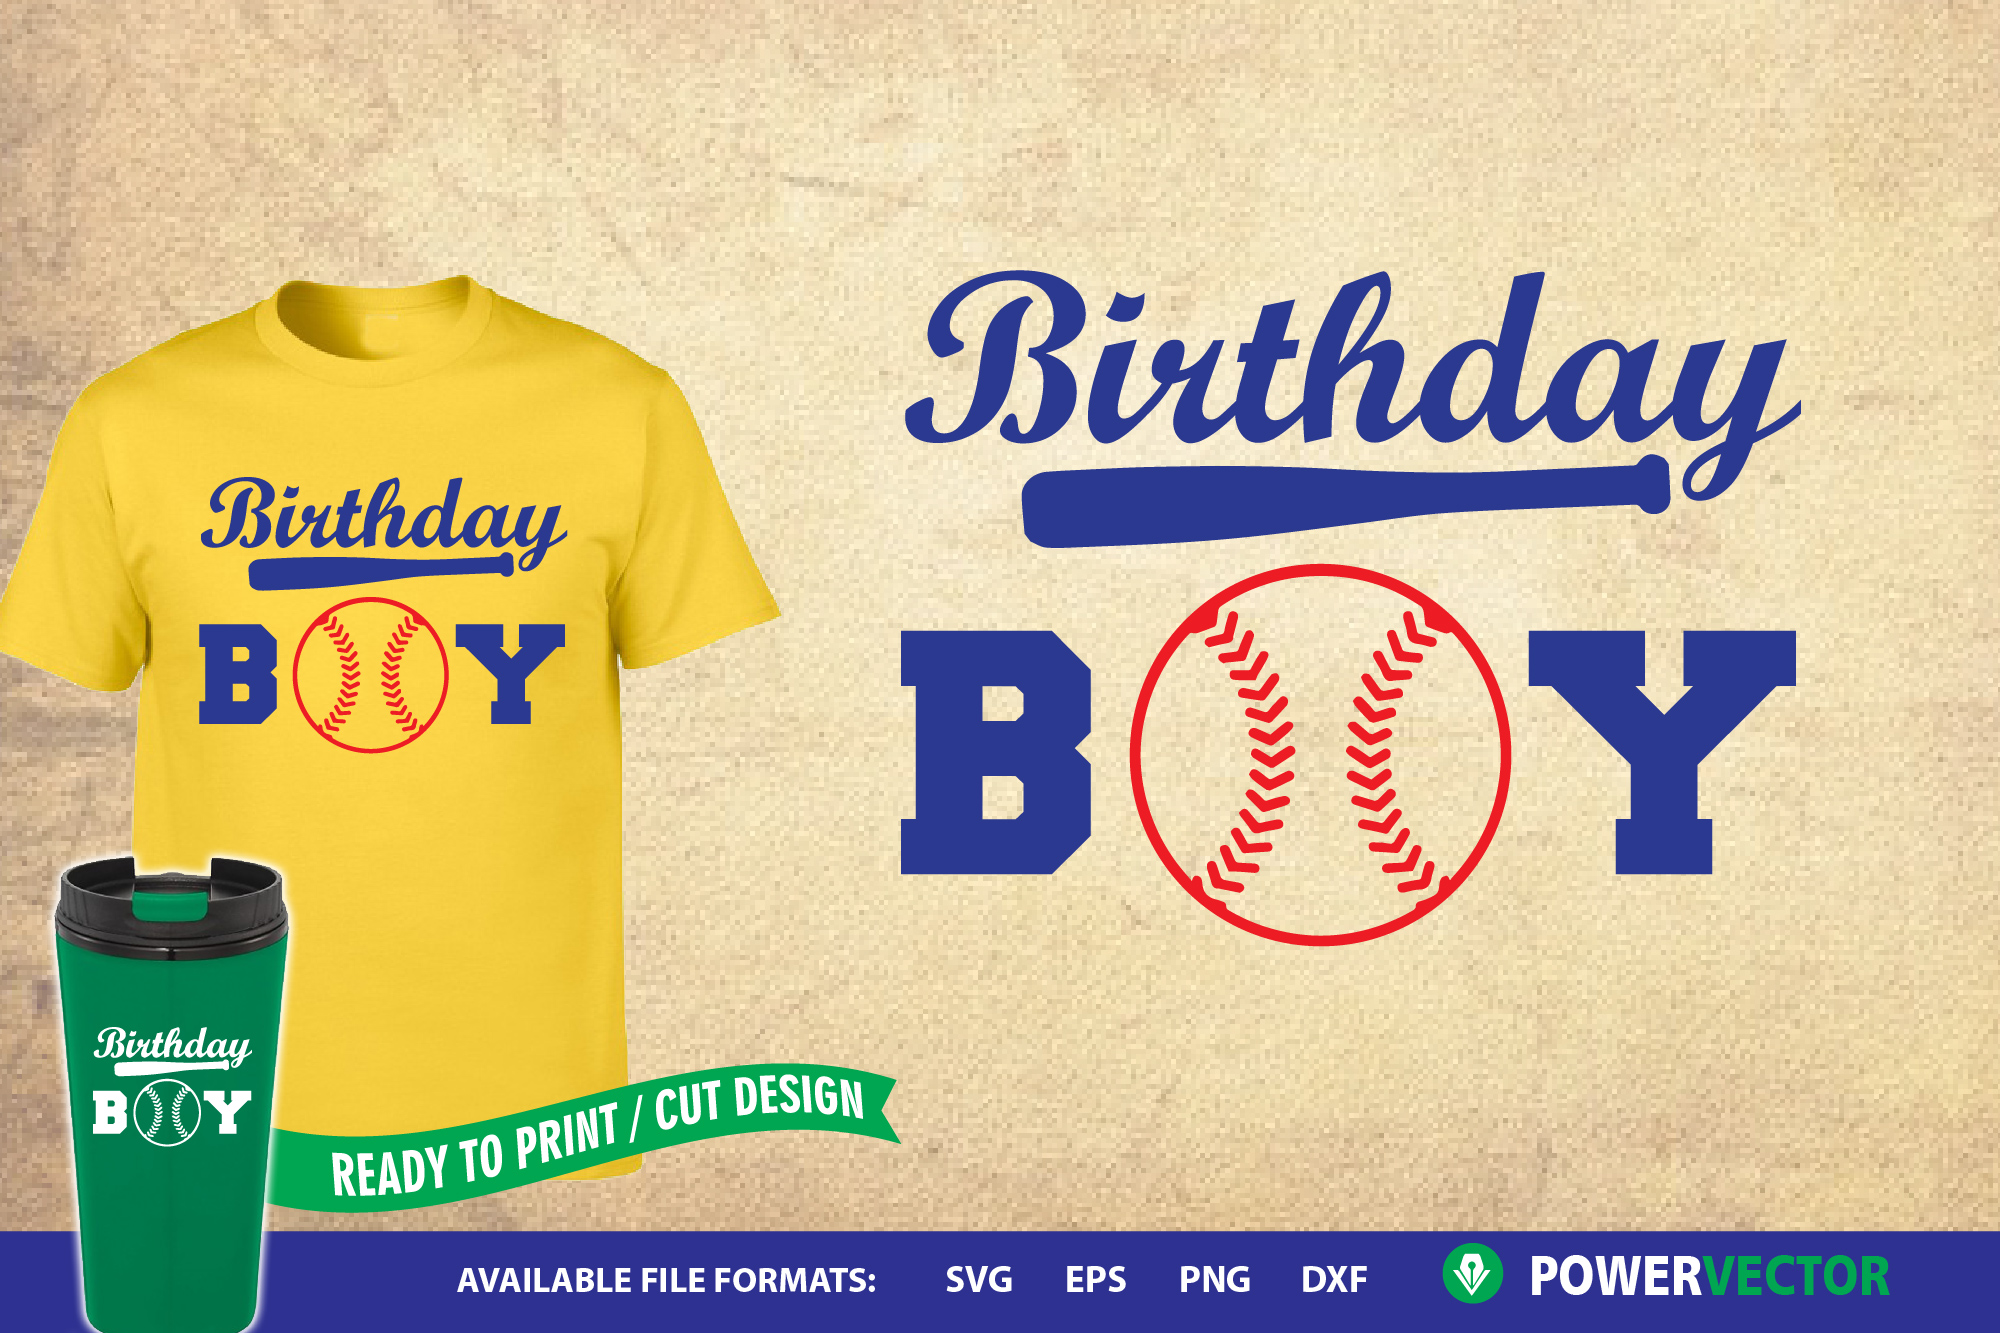 Birthday Boy SVG| Birthday Family Attire Print, Cut Files